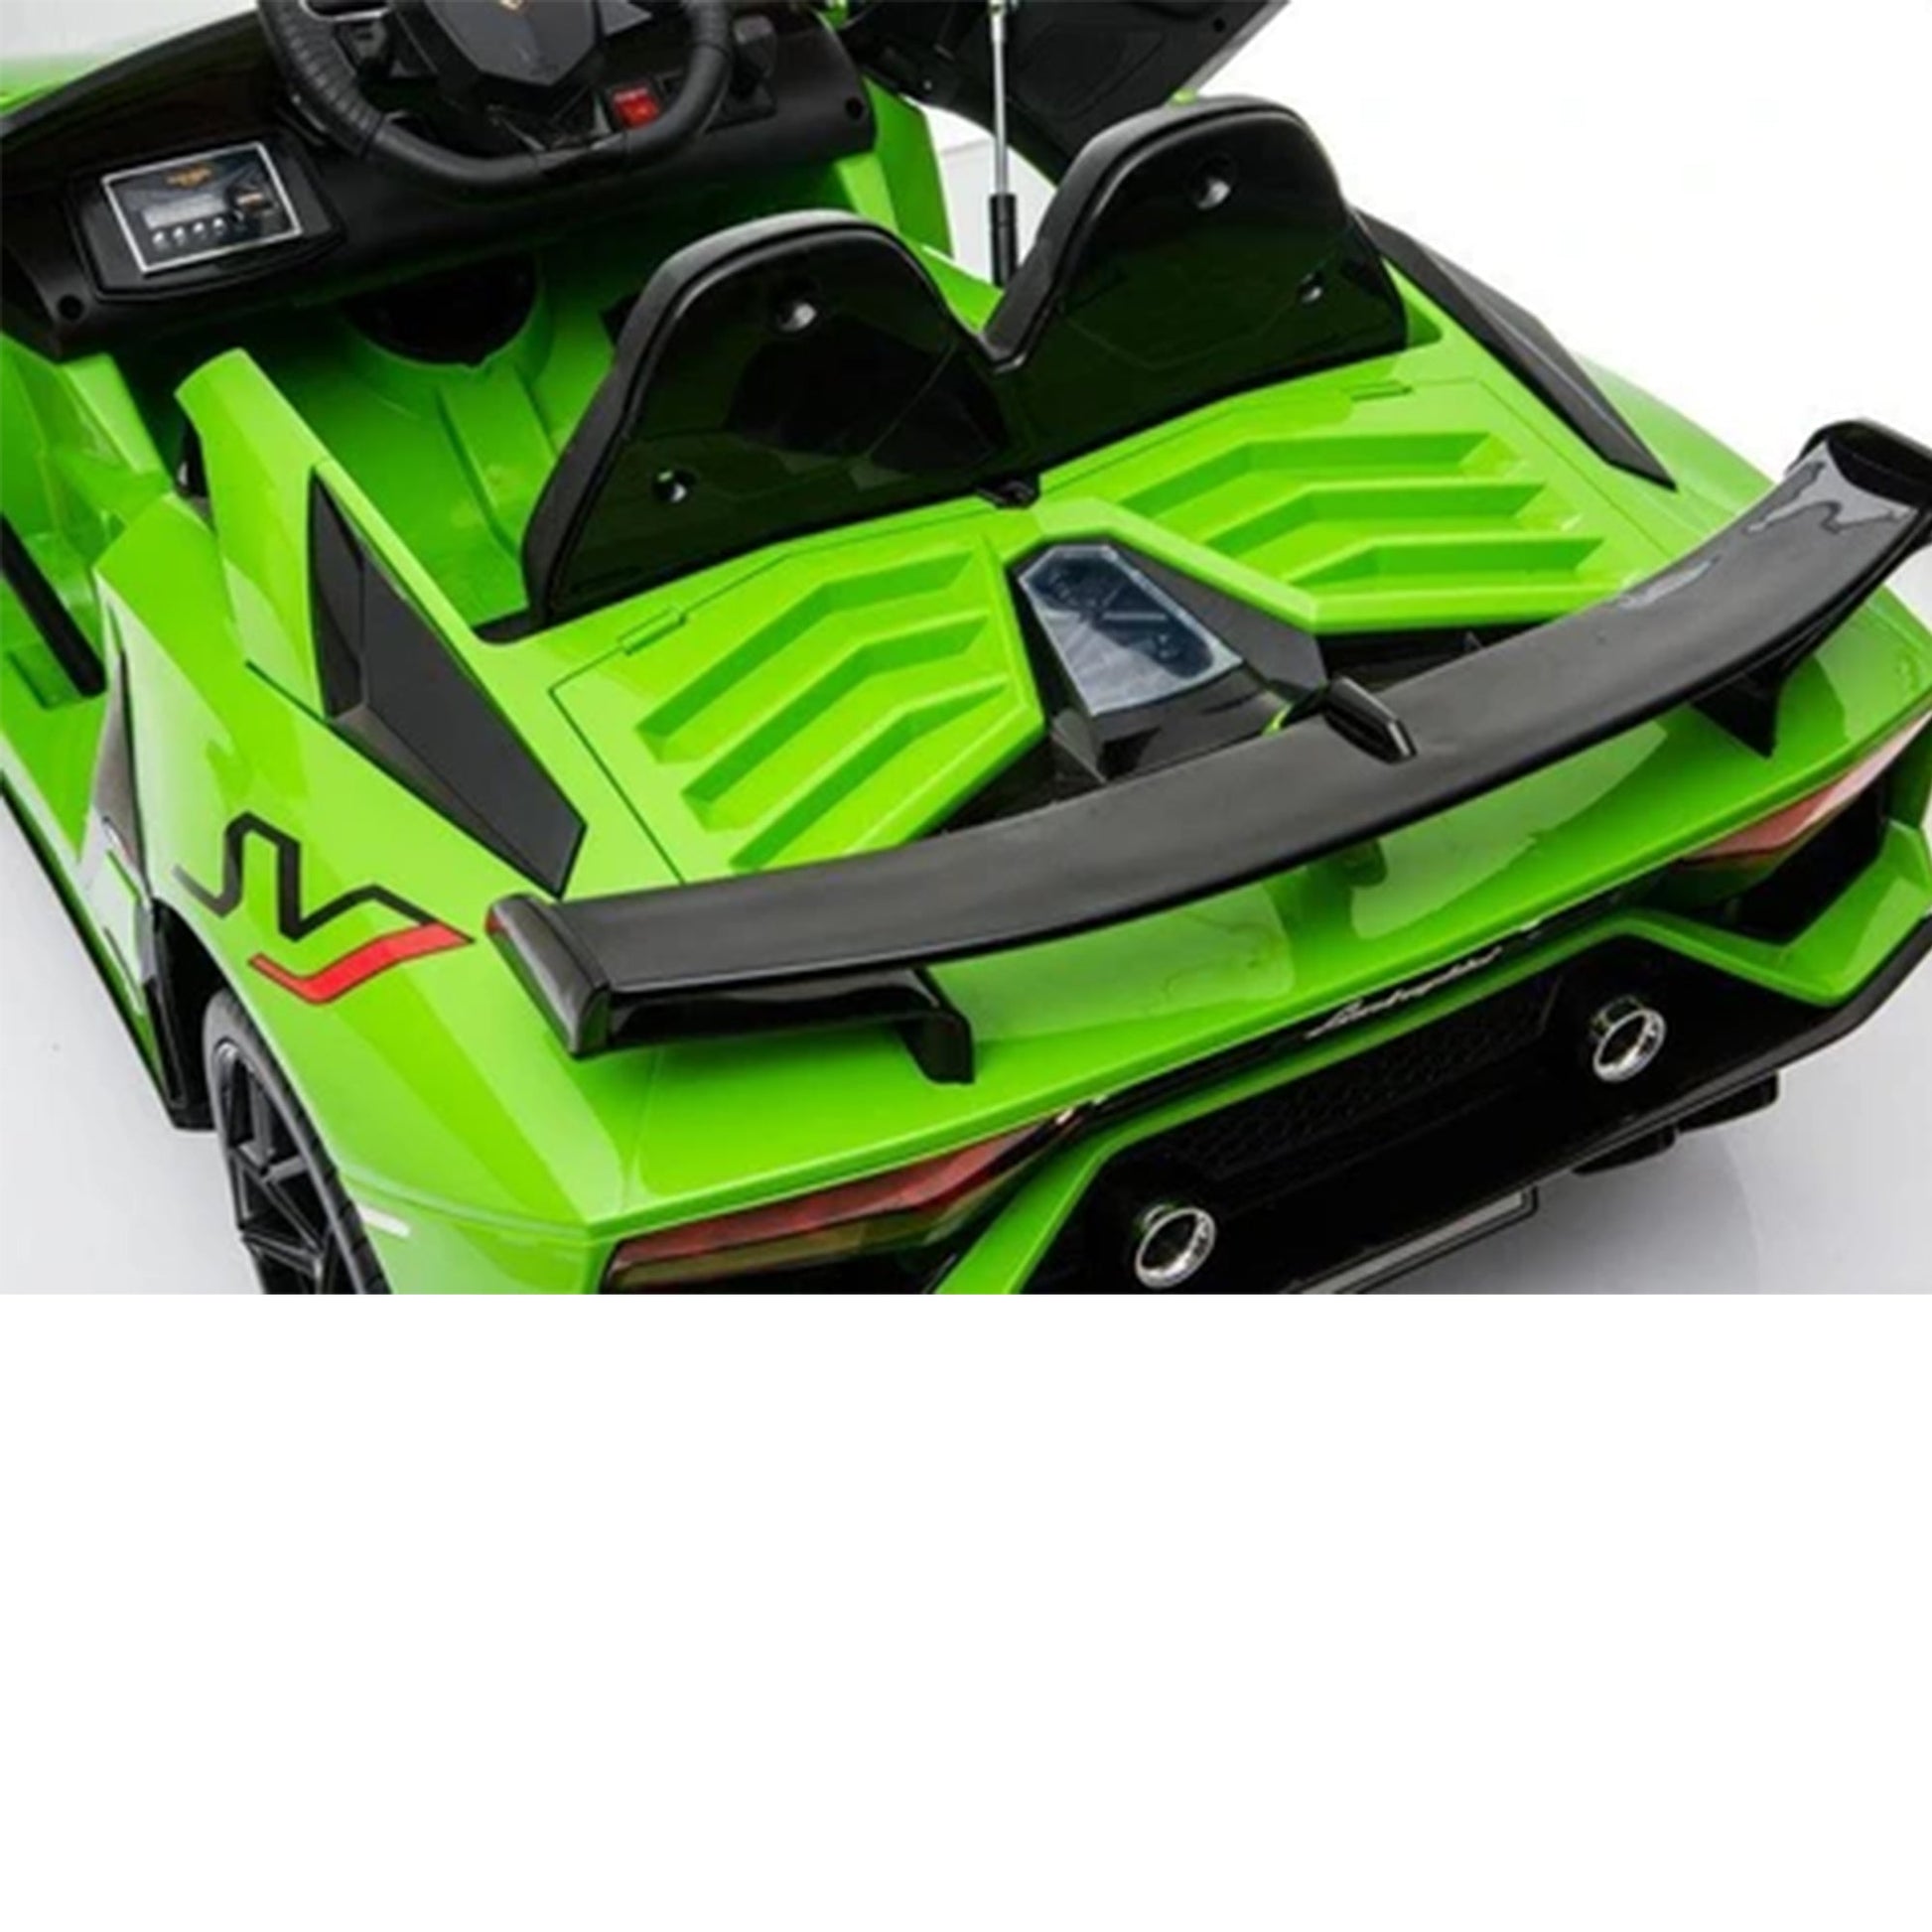 "Green Lamborghini SVJ Kids Ride On showcased in Kids Car Store."